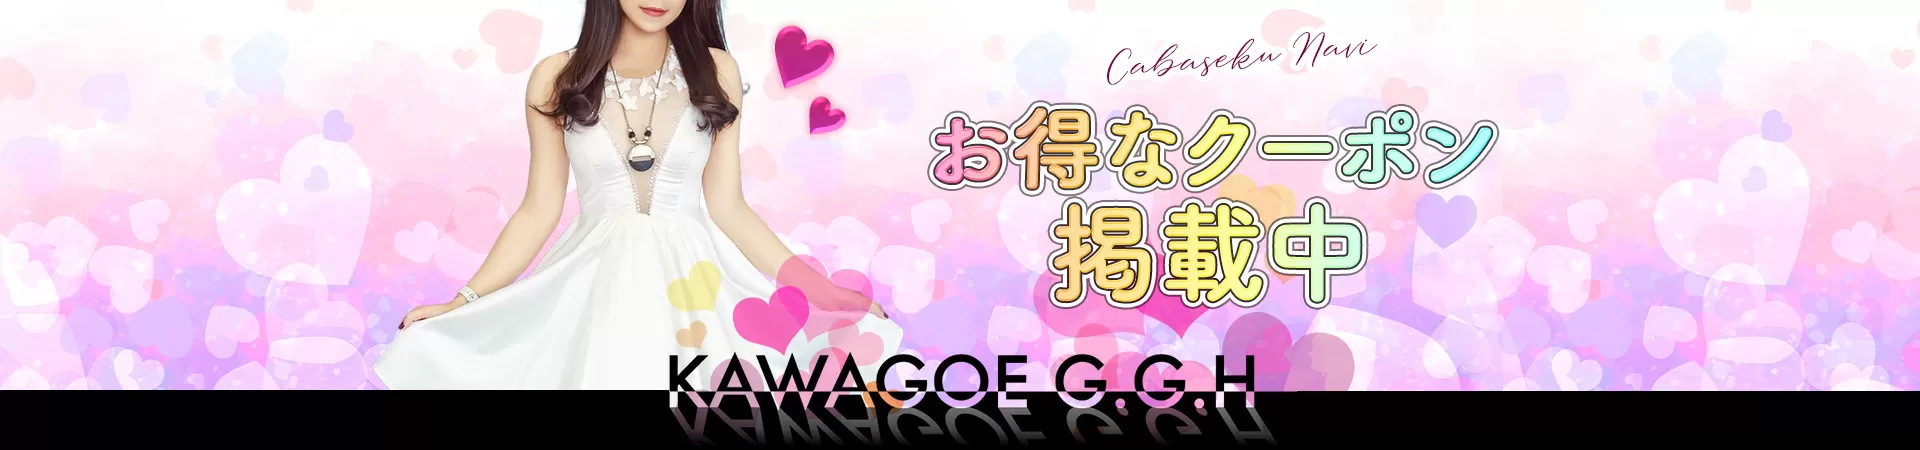 KAWAGOE G.G.H(カワゴエジージーエイチ)